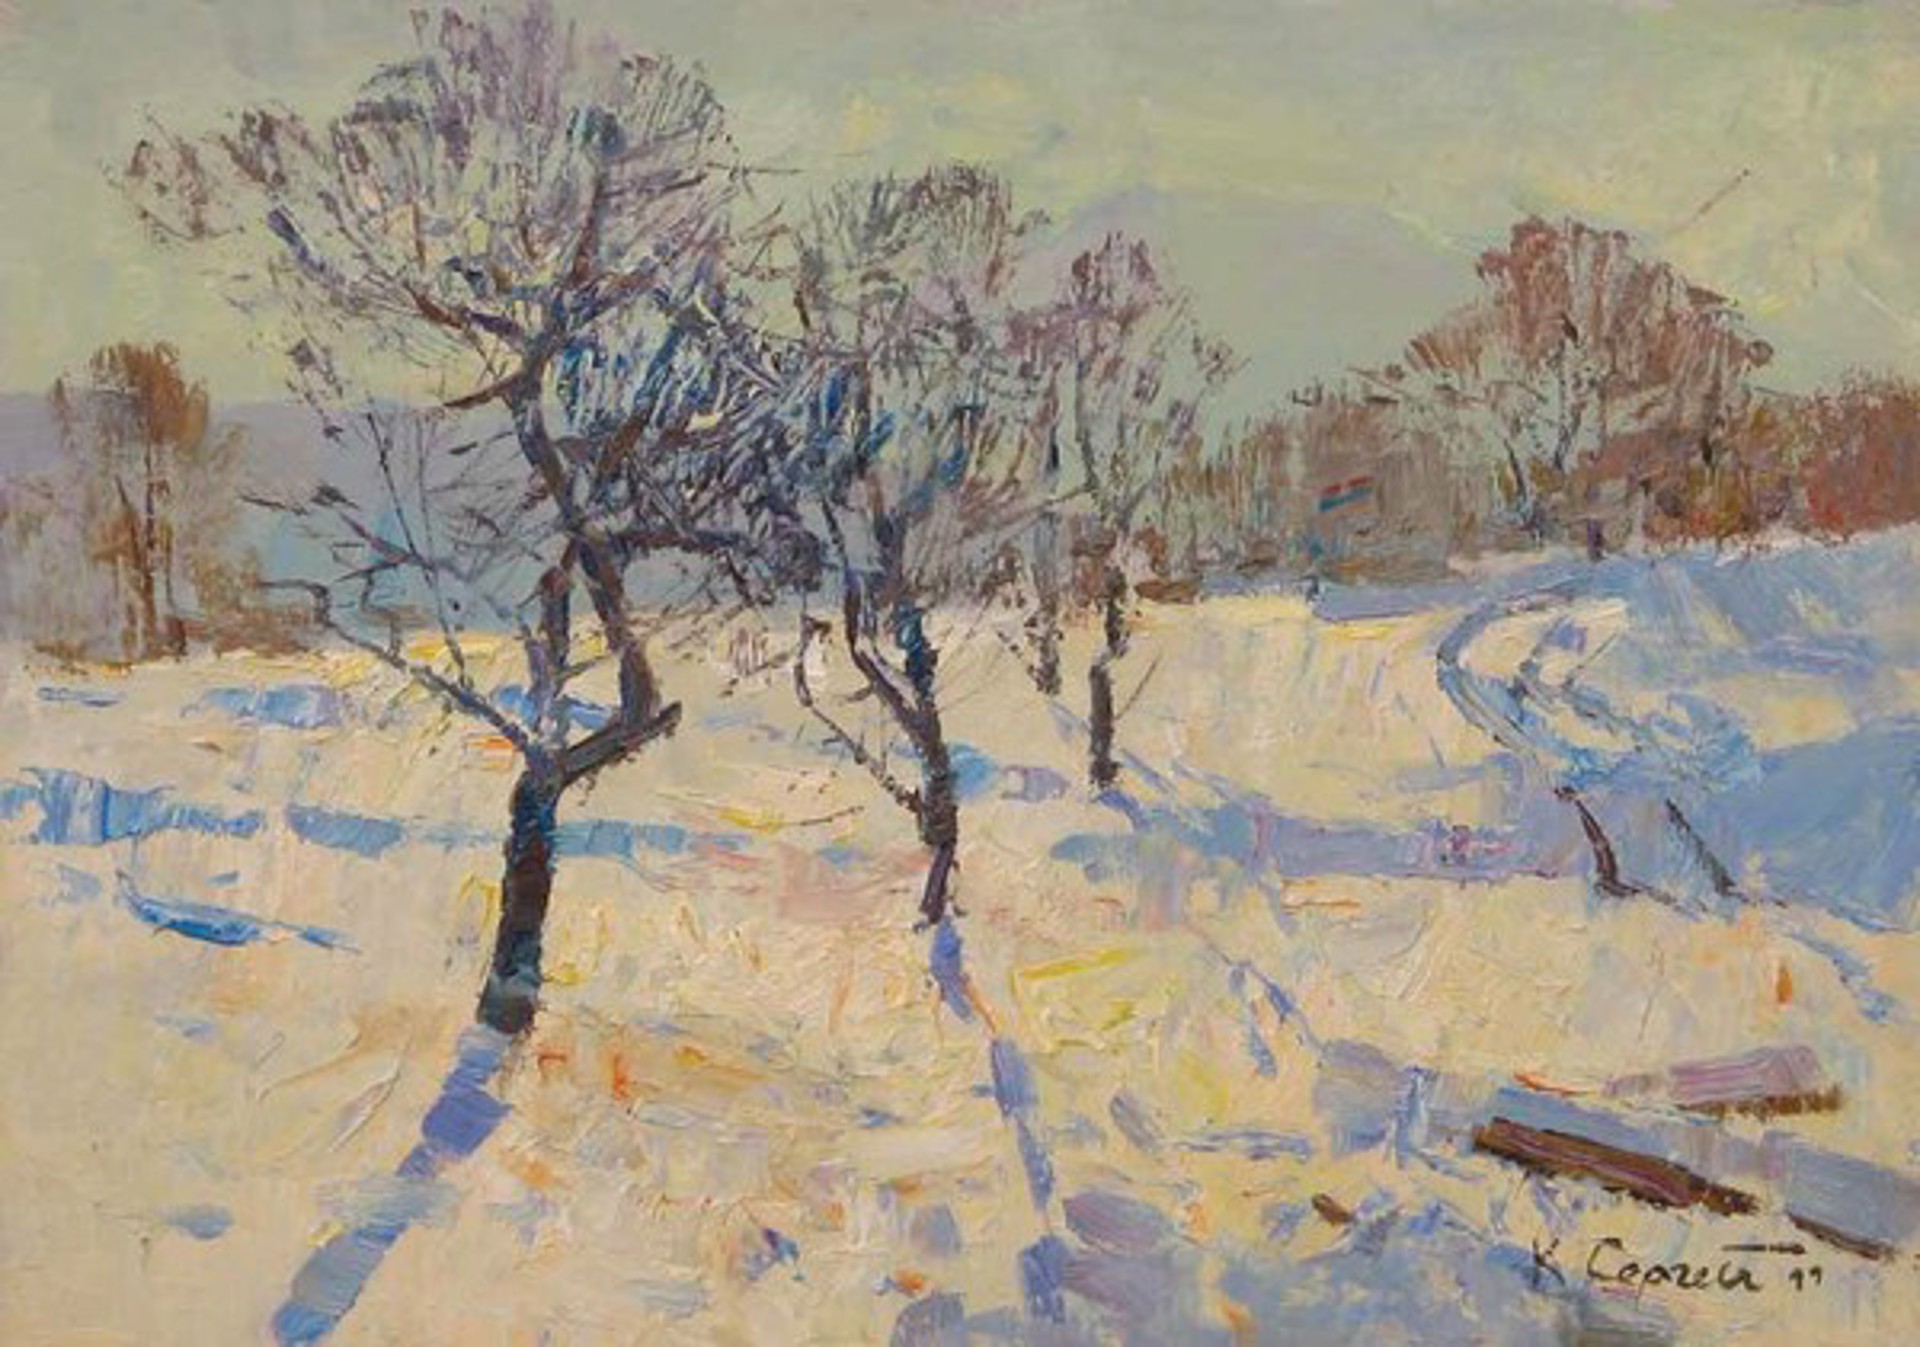 Silver on the Snow by Sergei Kovalenko